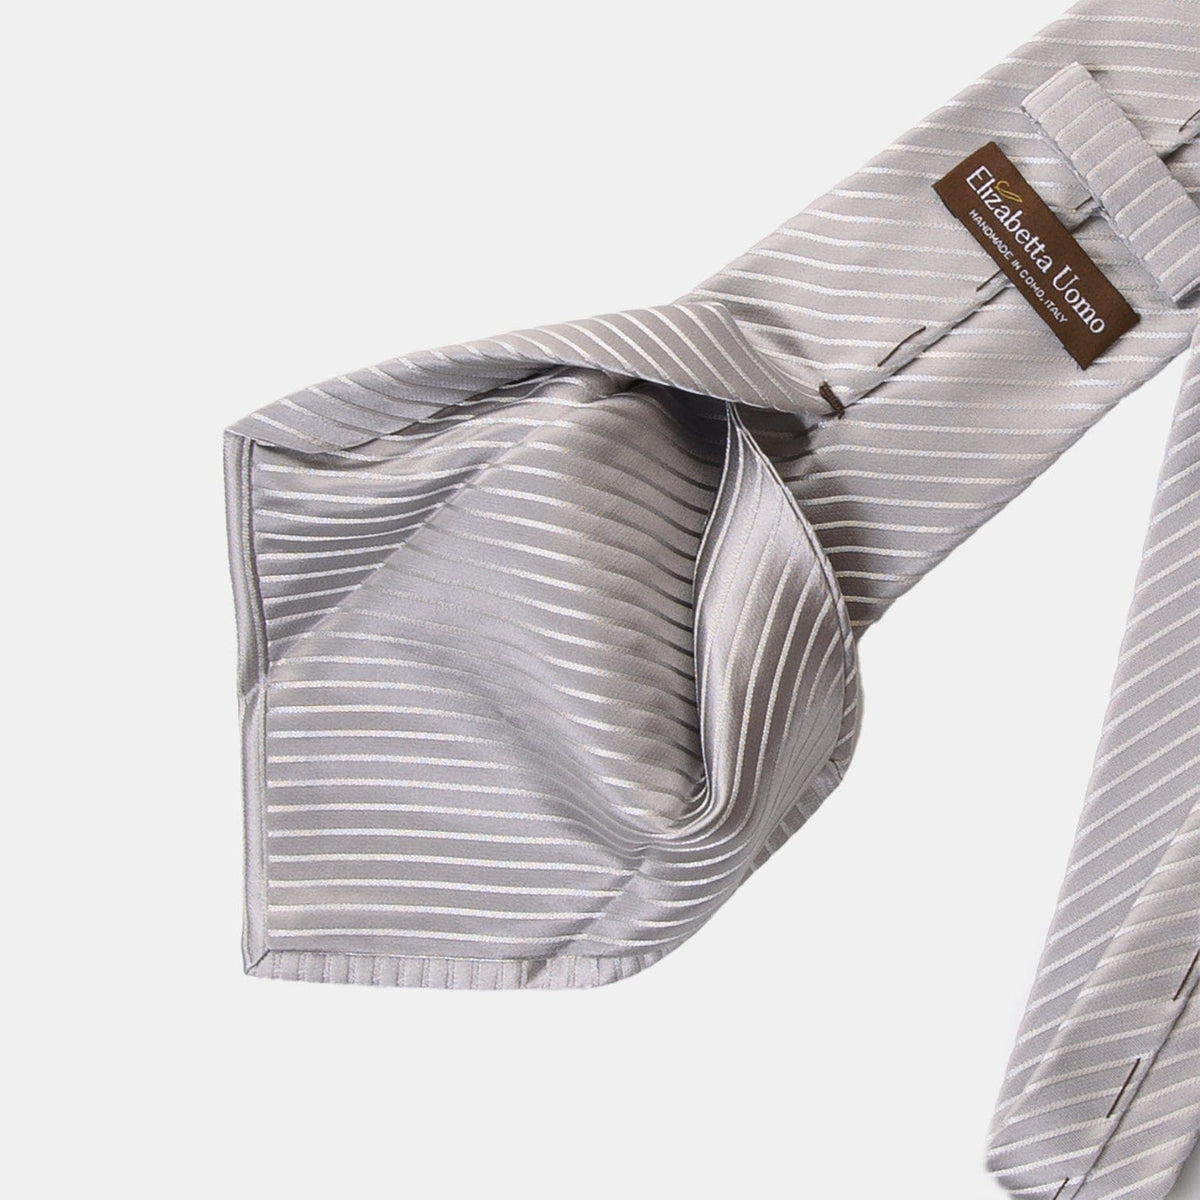 Extra long silver striped silk tie